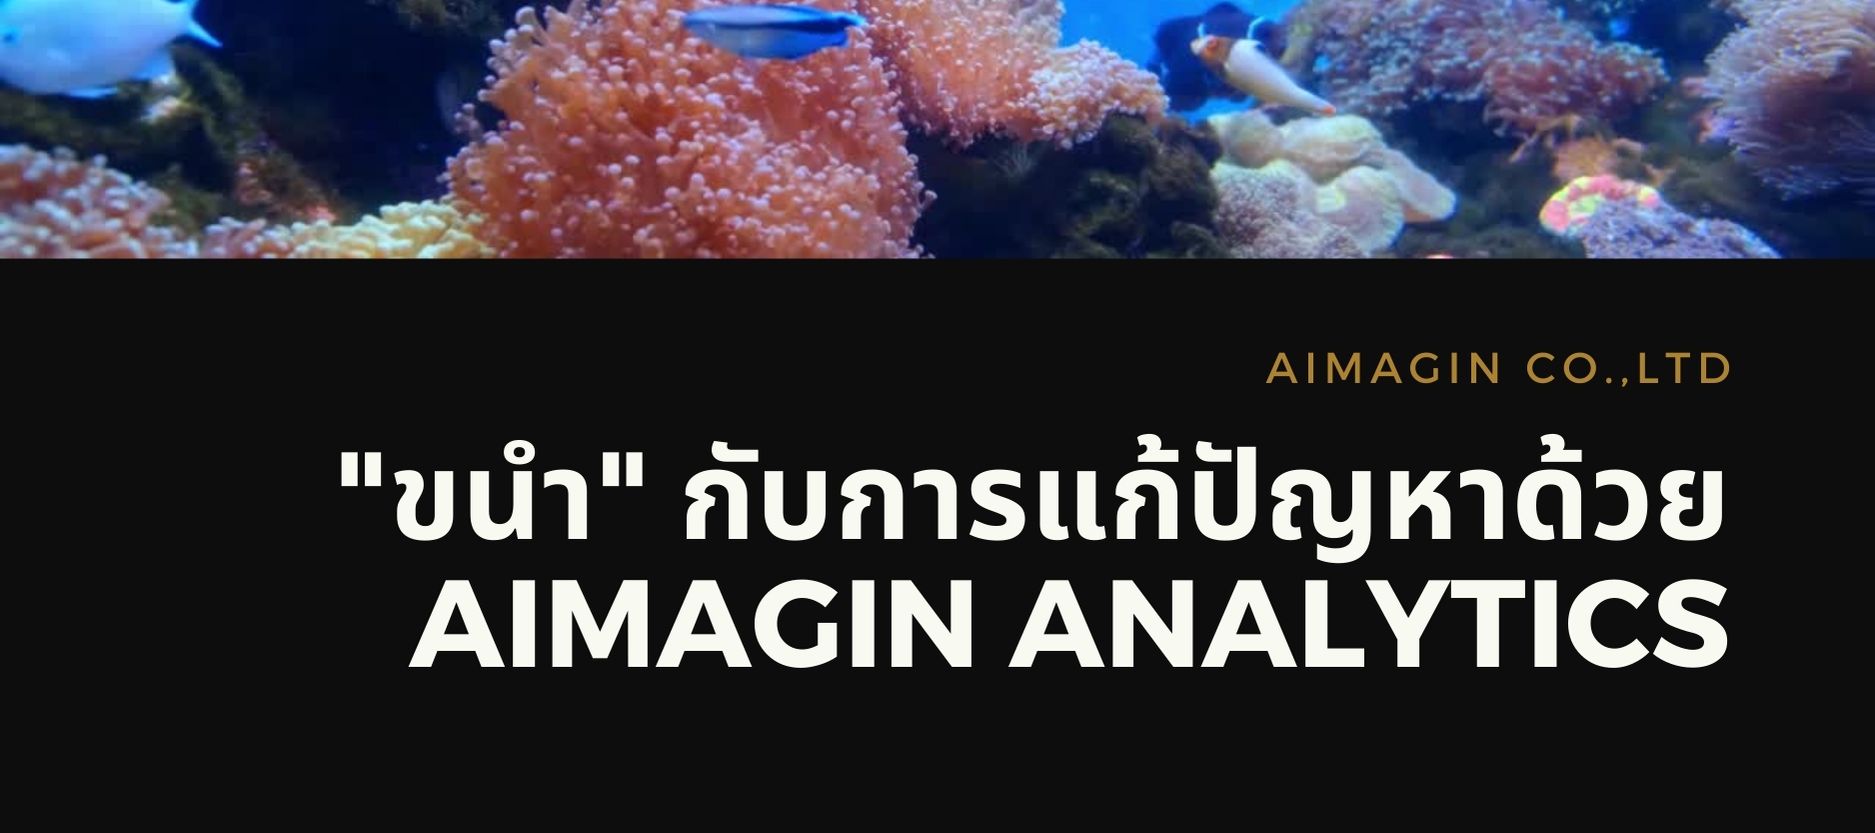 Aimagin Analytics for Shellfish Culture